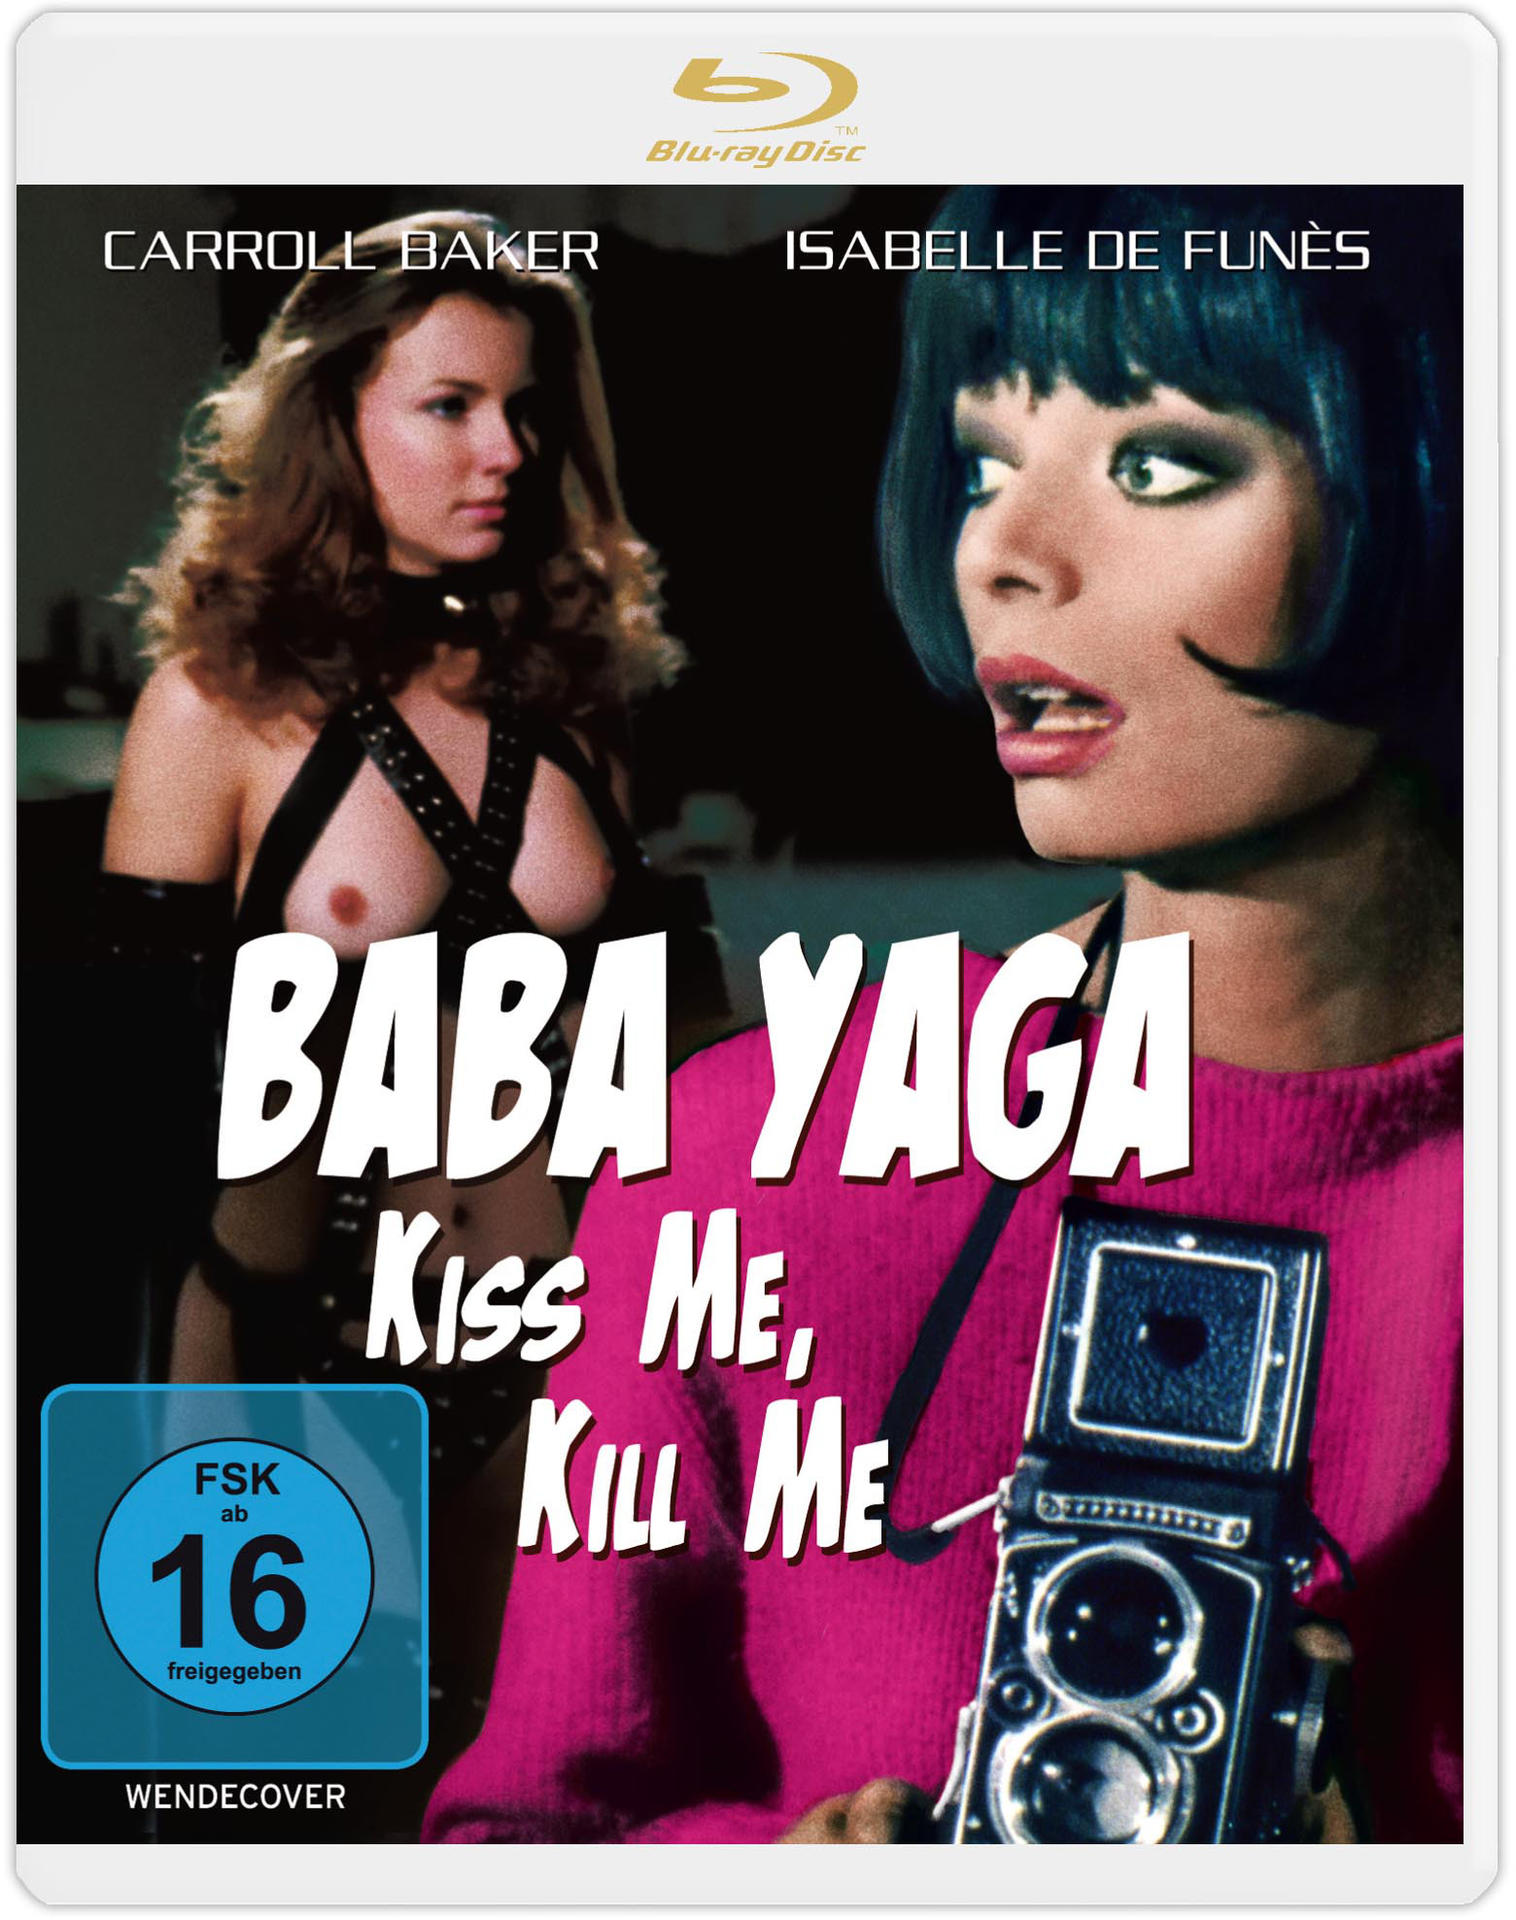 Baba Yaga - Kiss Kill Me, Me Blu-ray